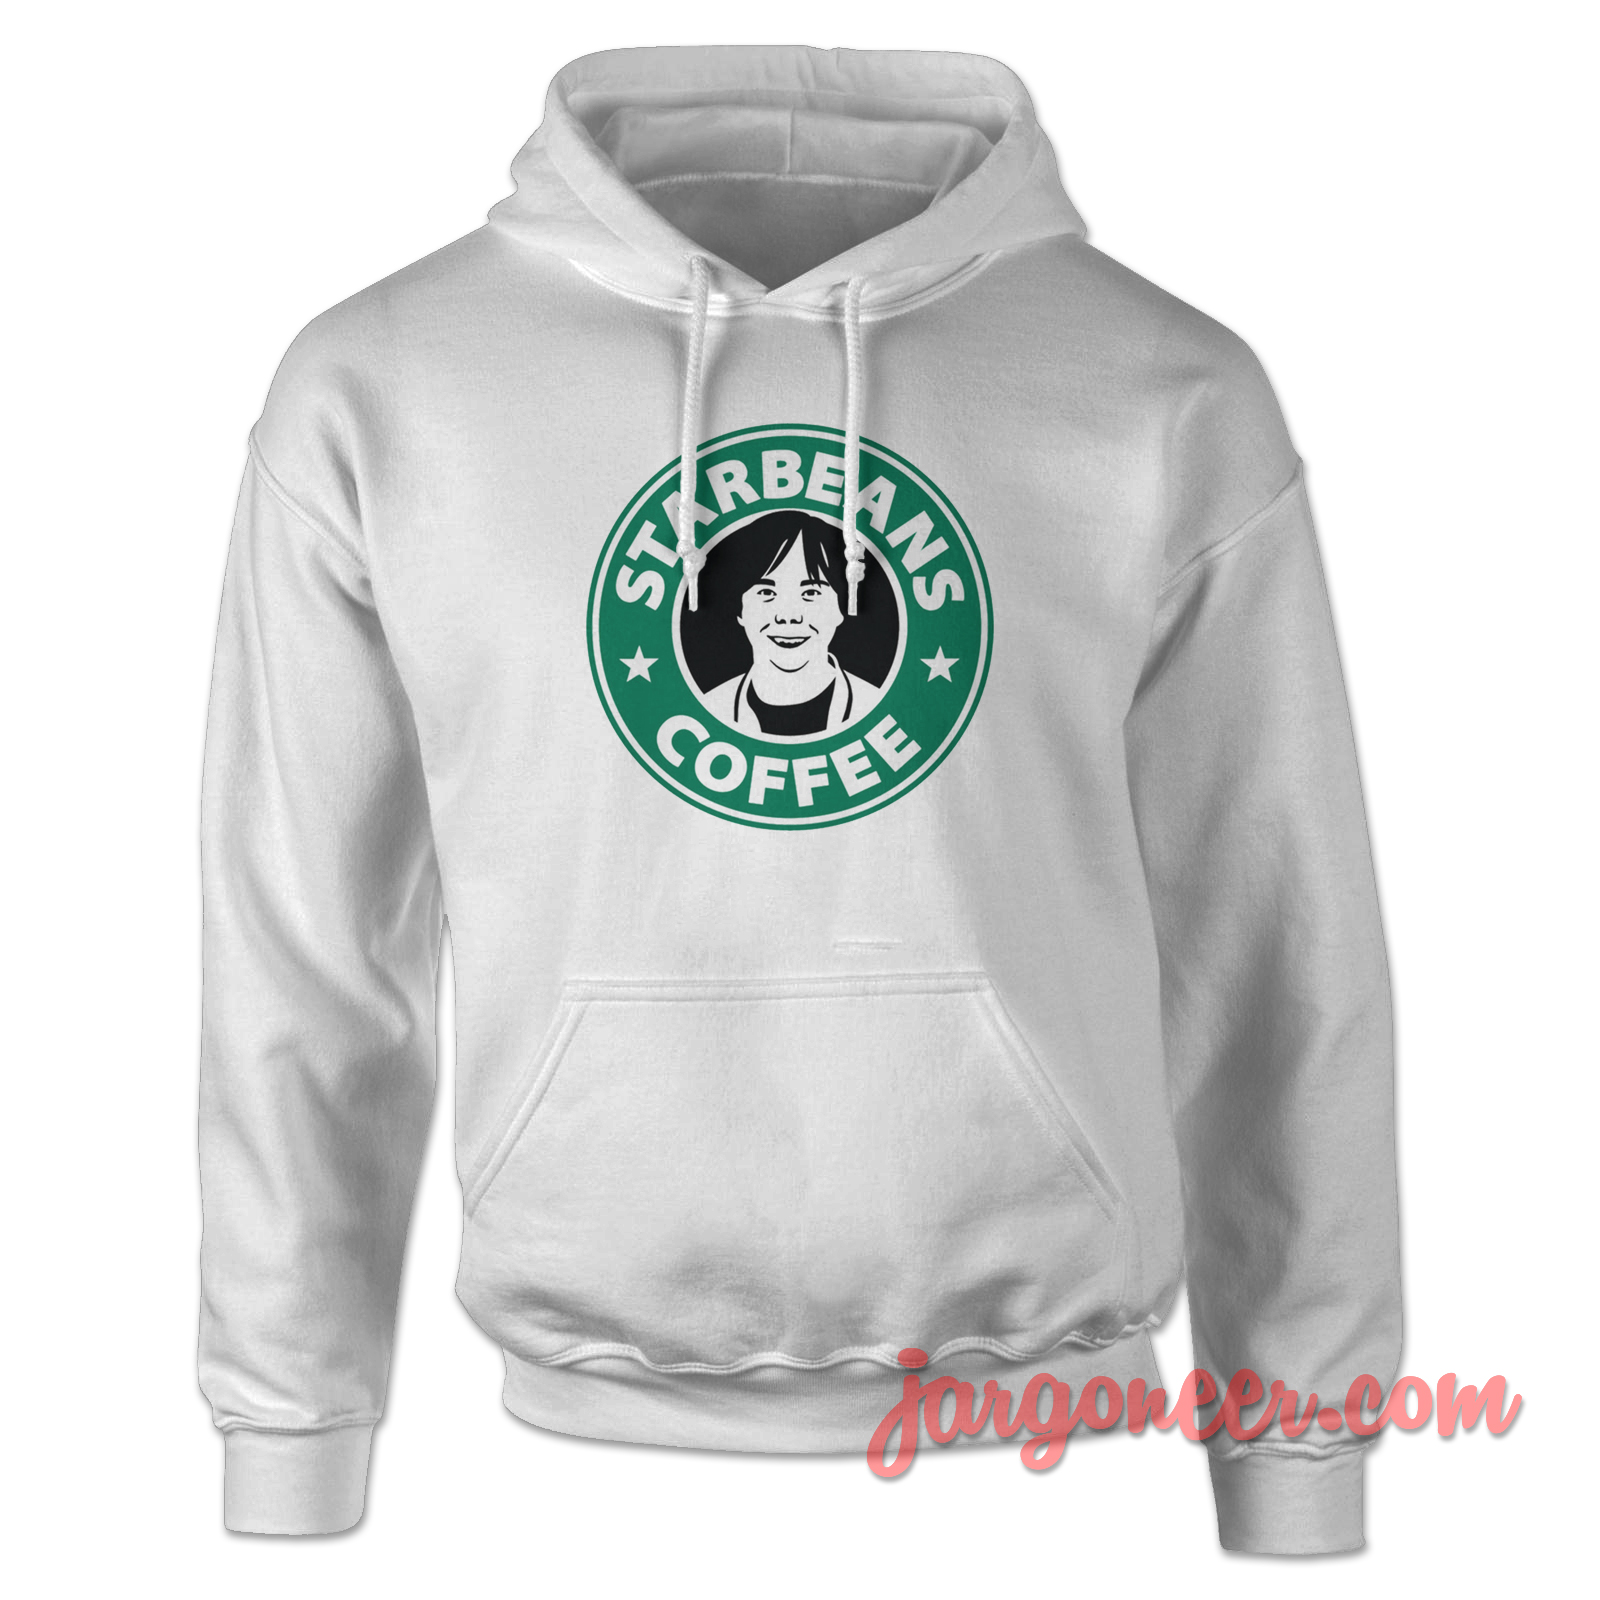 Starbeans Coffee - Shop Unique Graphic Cool Shirt Designs